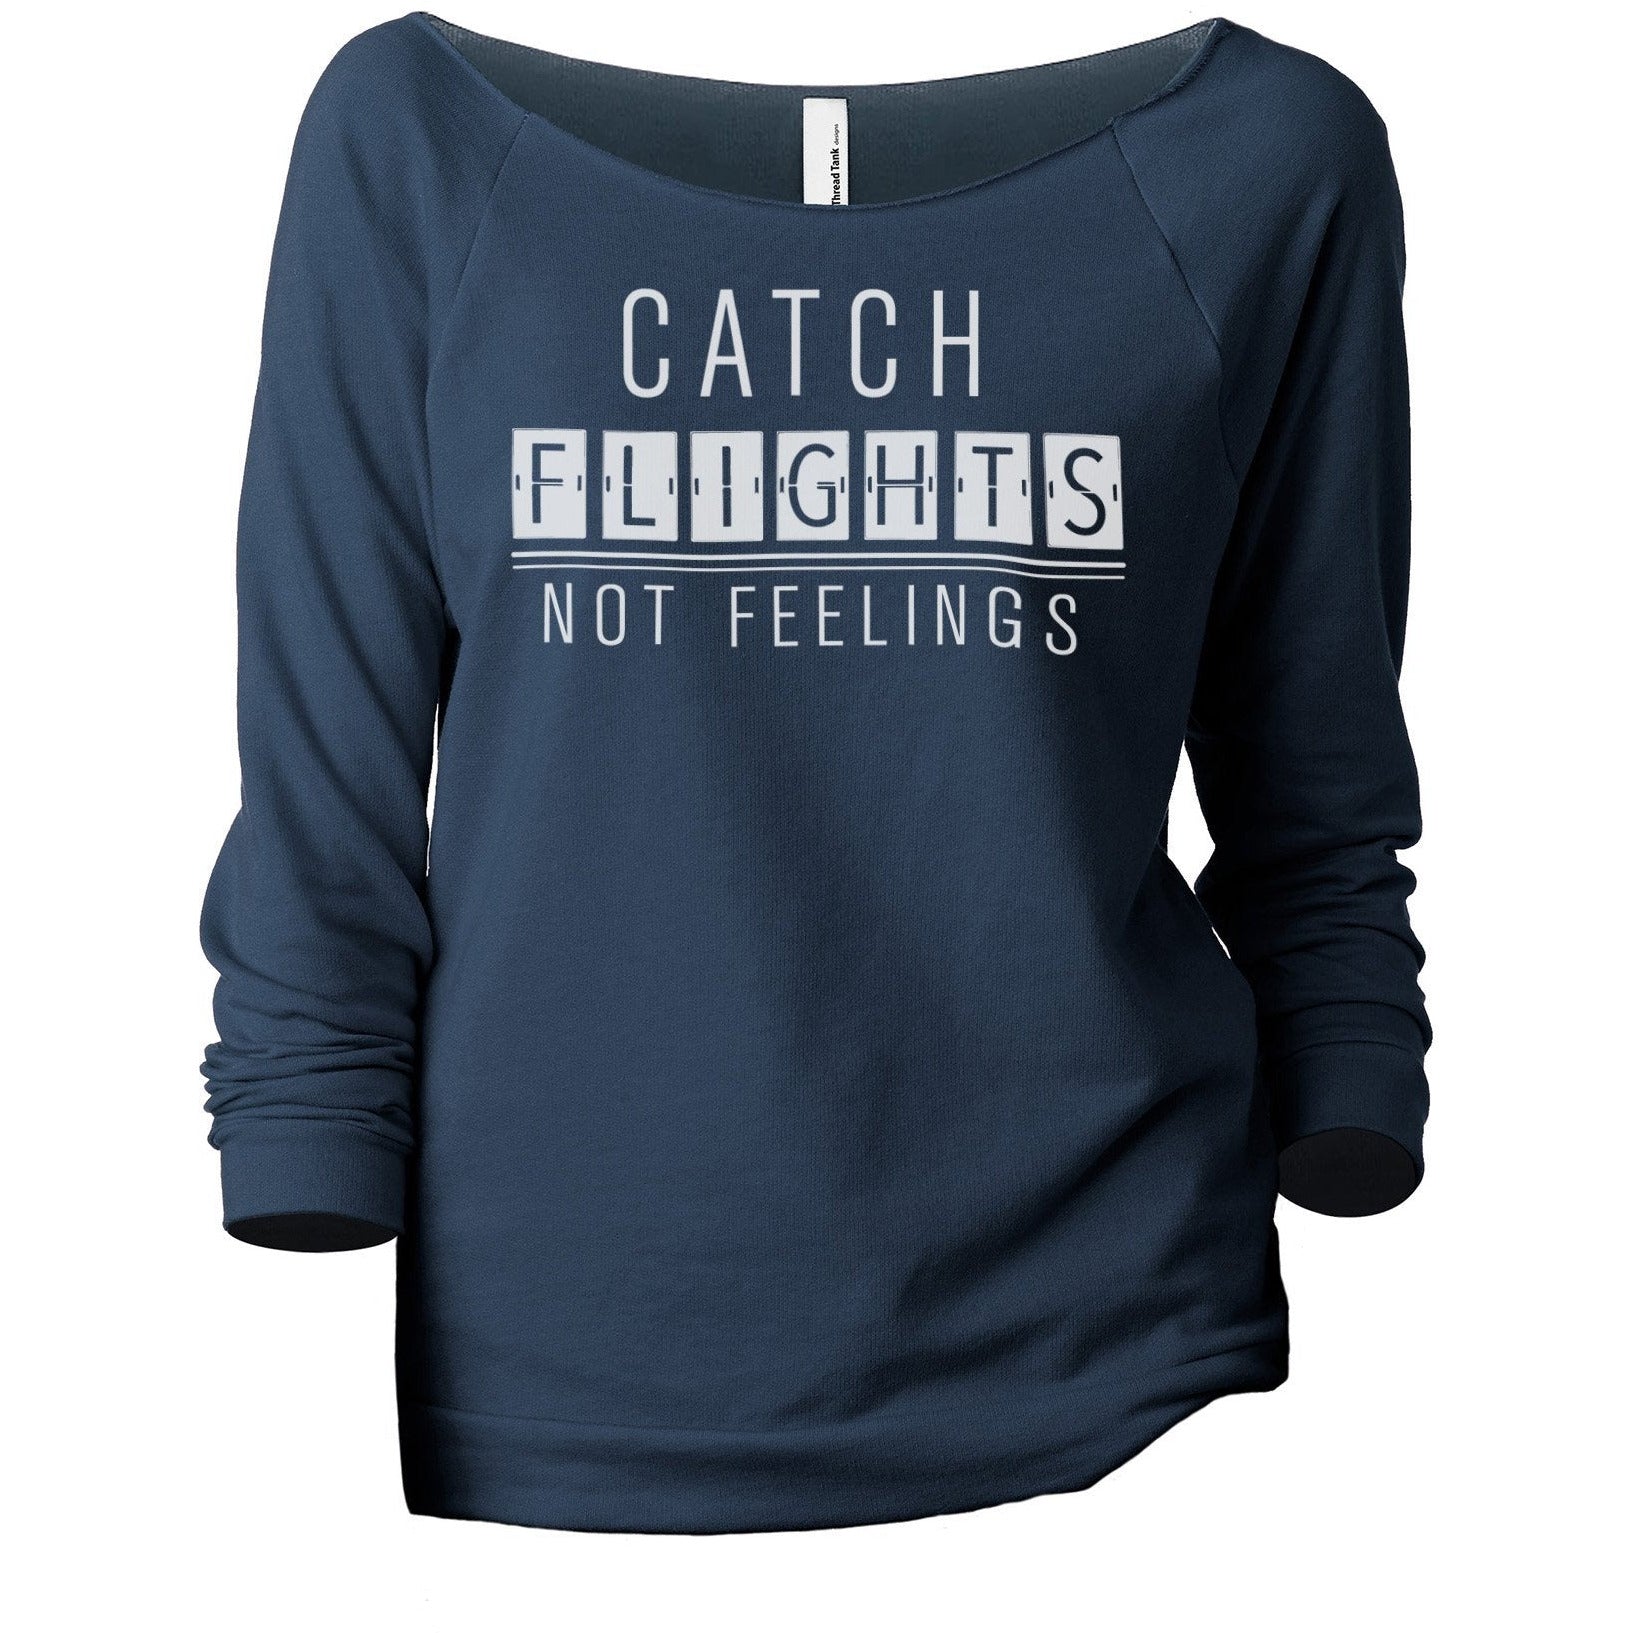 Catch Flights Not Feelings Women's Graphic Printed Lightweight Slouchy 3/4 Sleeves Sweatshirt Navy